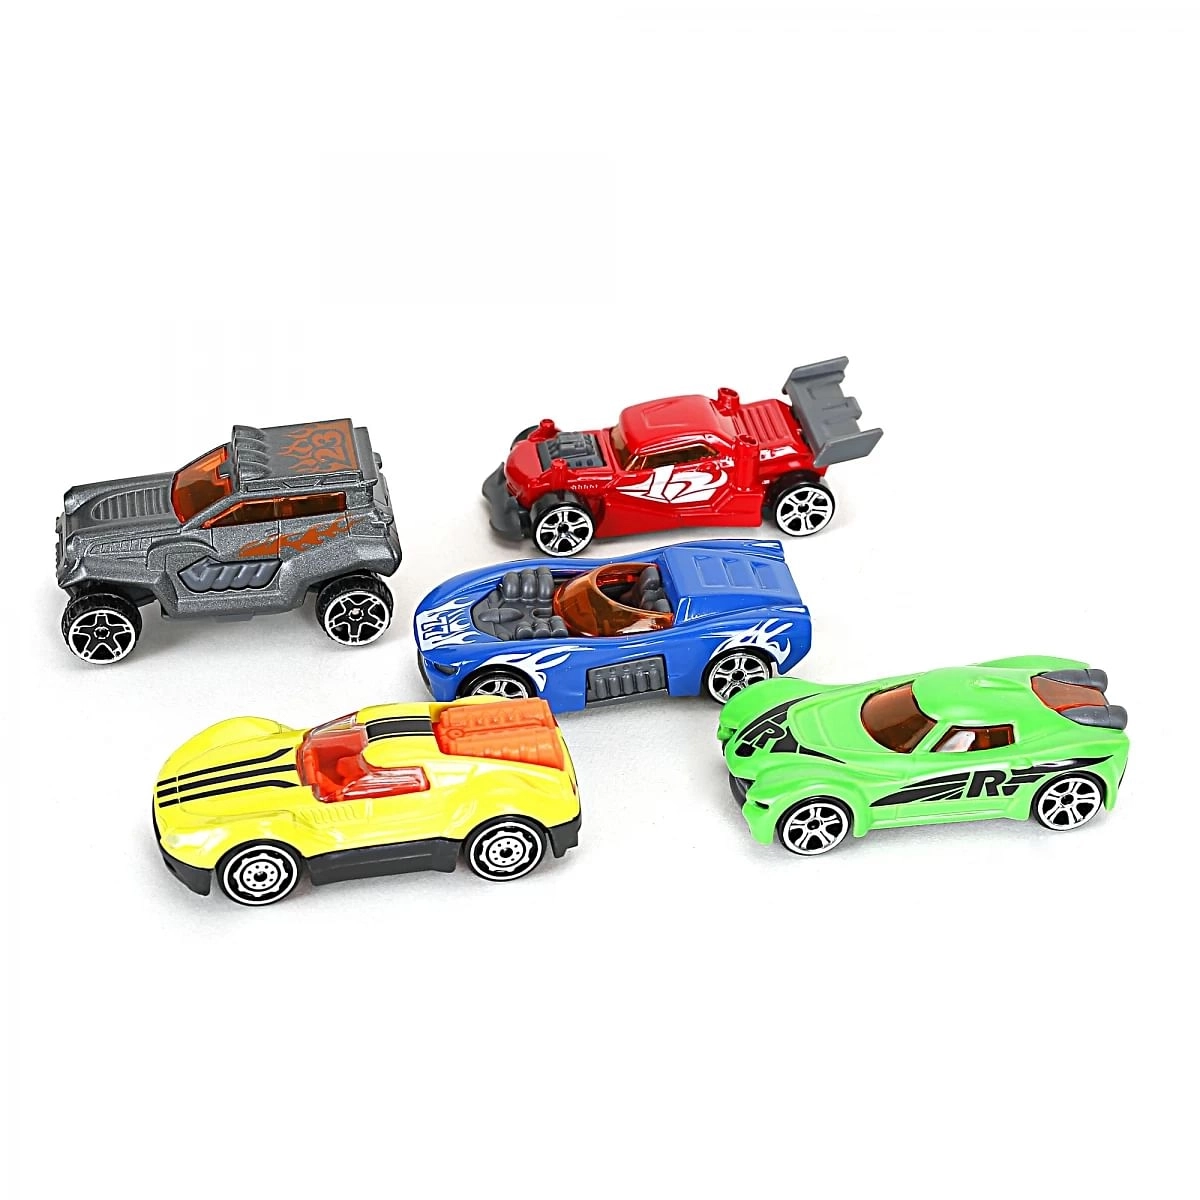 Ralleyz Pro Firefleet Street Machines Die Cast Toy Cars for Kids, Pack of 5, 3Y+